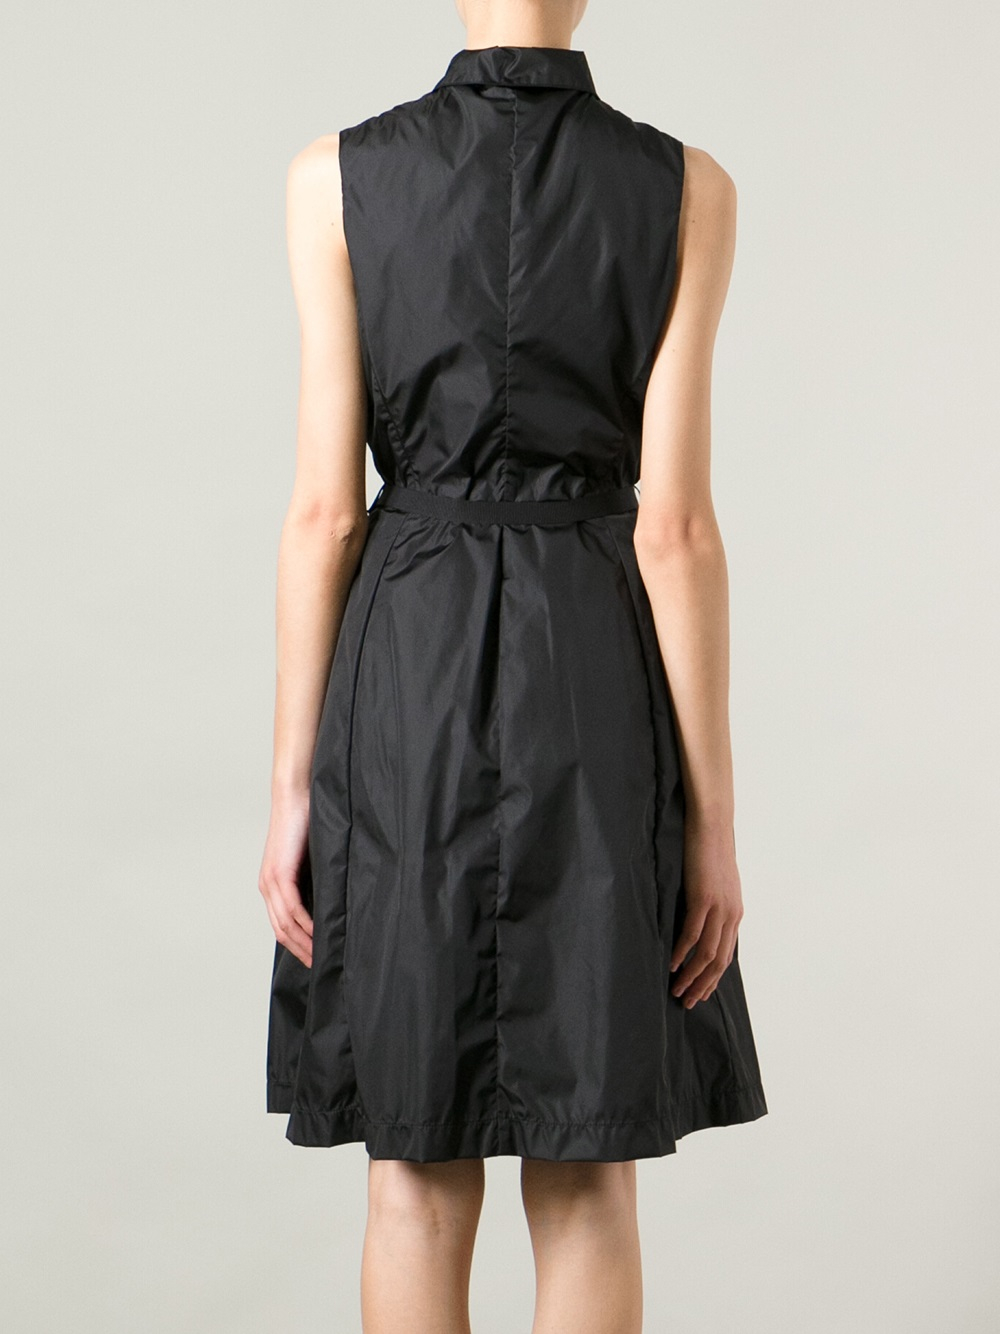 Moncler Zipped Dress in Black | Lyst